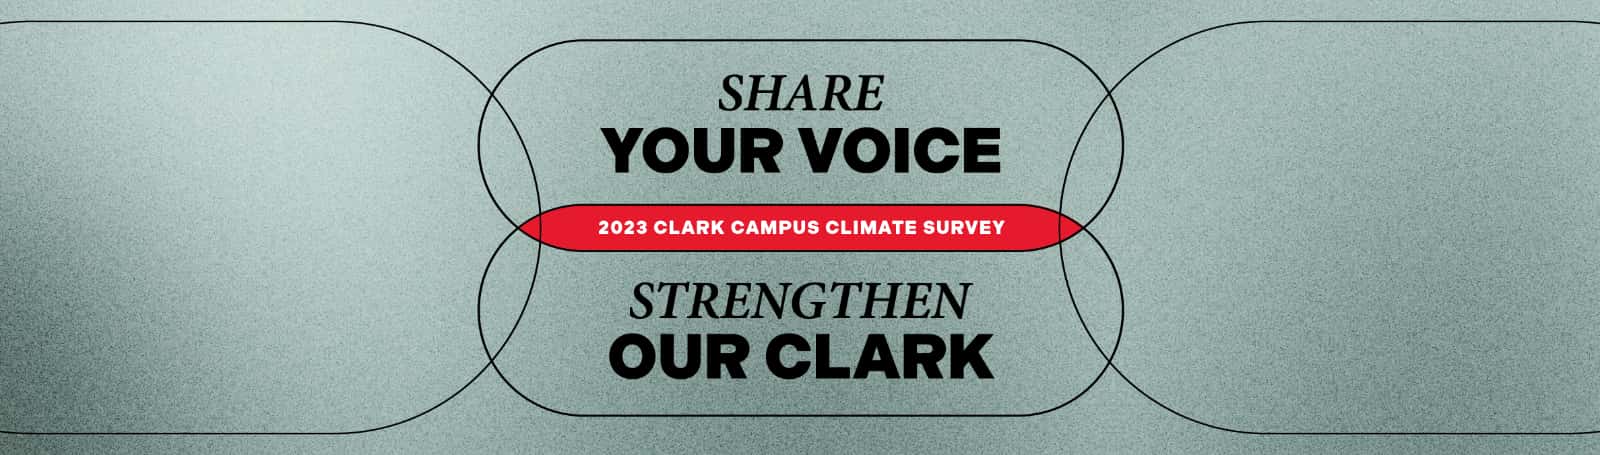 Share your voice, Strengthen our Clark: 2023 Clark Campus Climate Survey